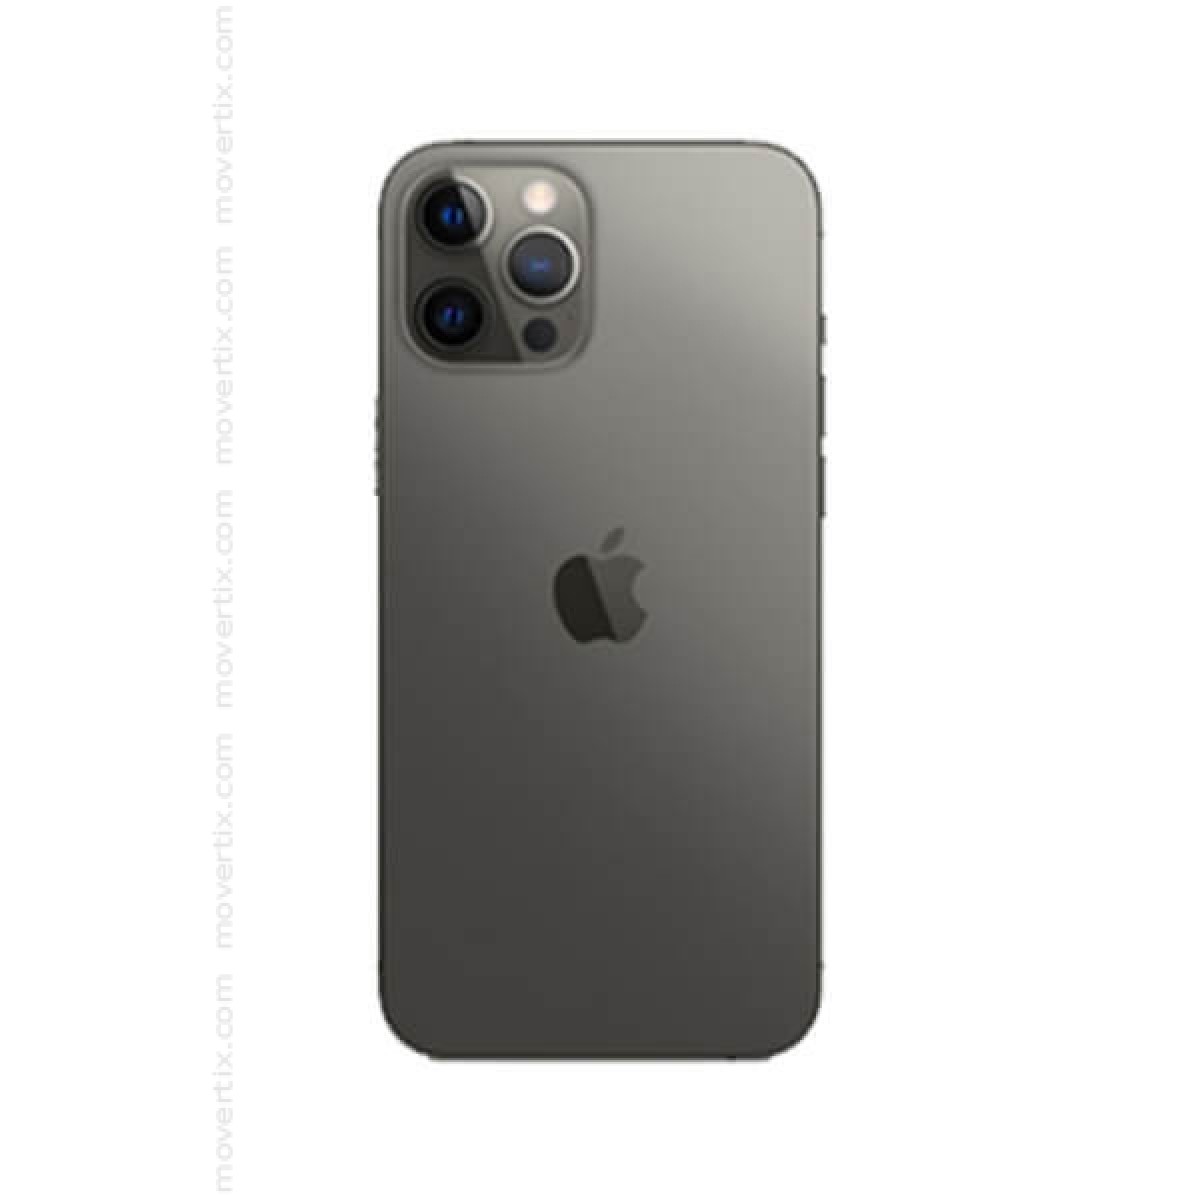 Iphone 12 Pro Max Graphite 512gb Movertix Mobile Phones Shop